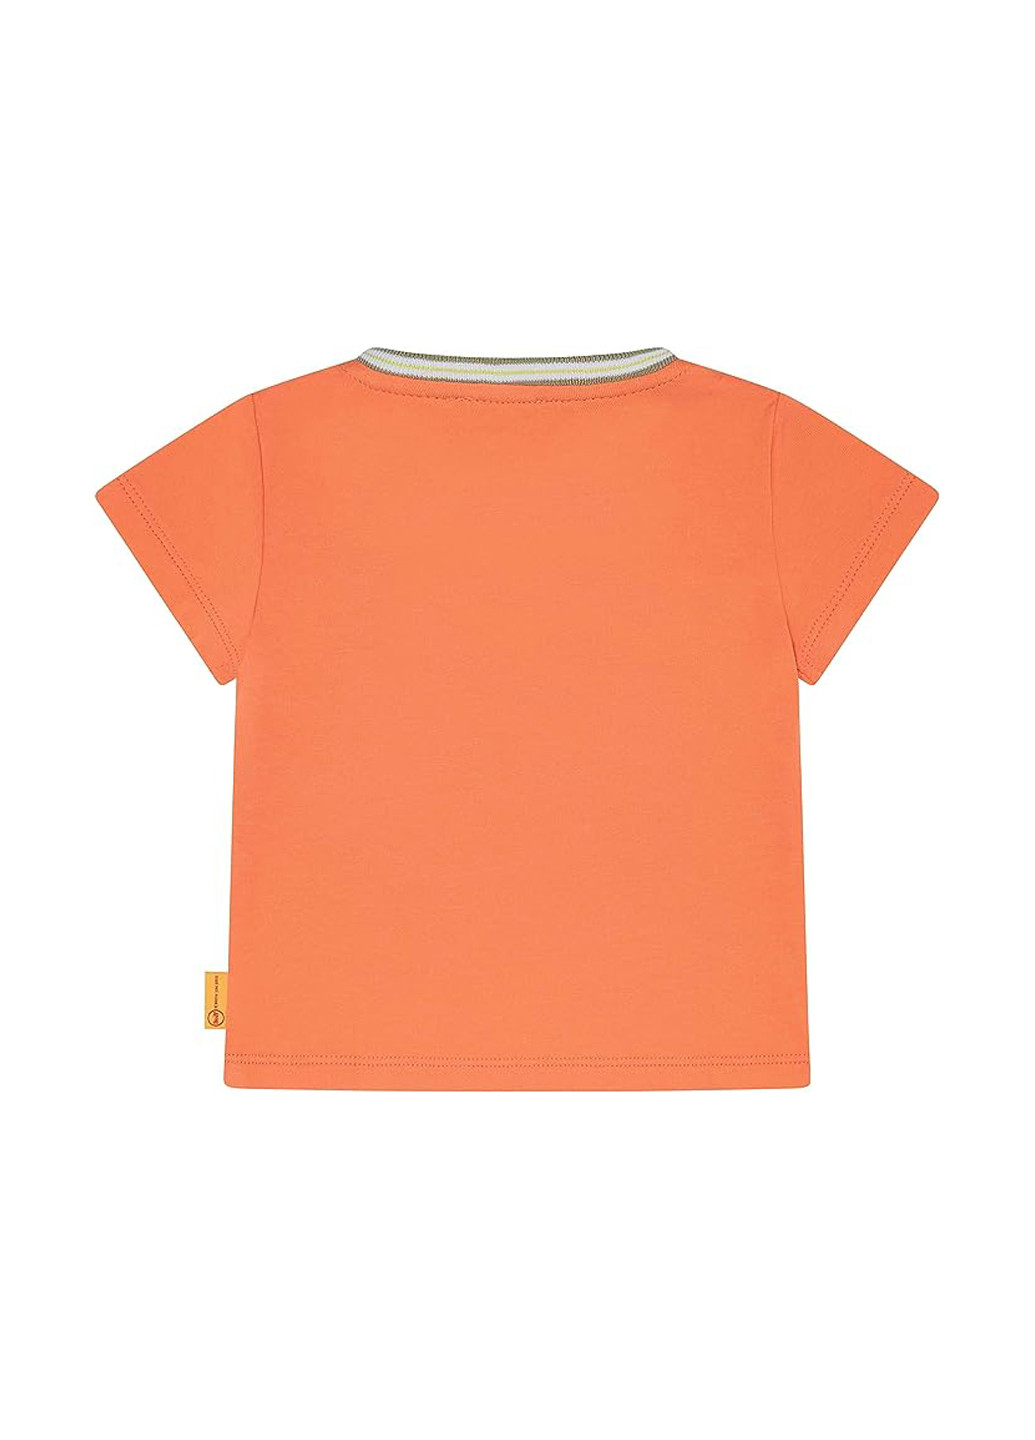 Светло-оранжевая летняя футболка Steiff